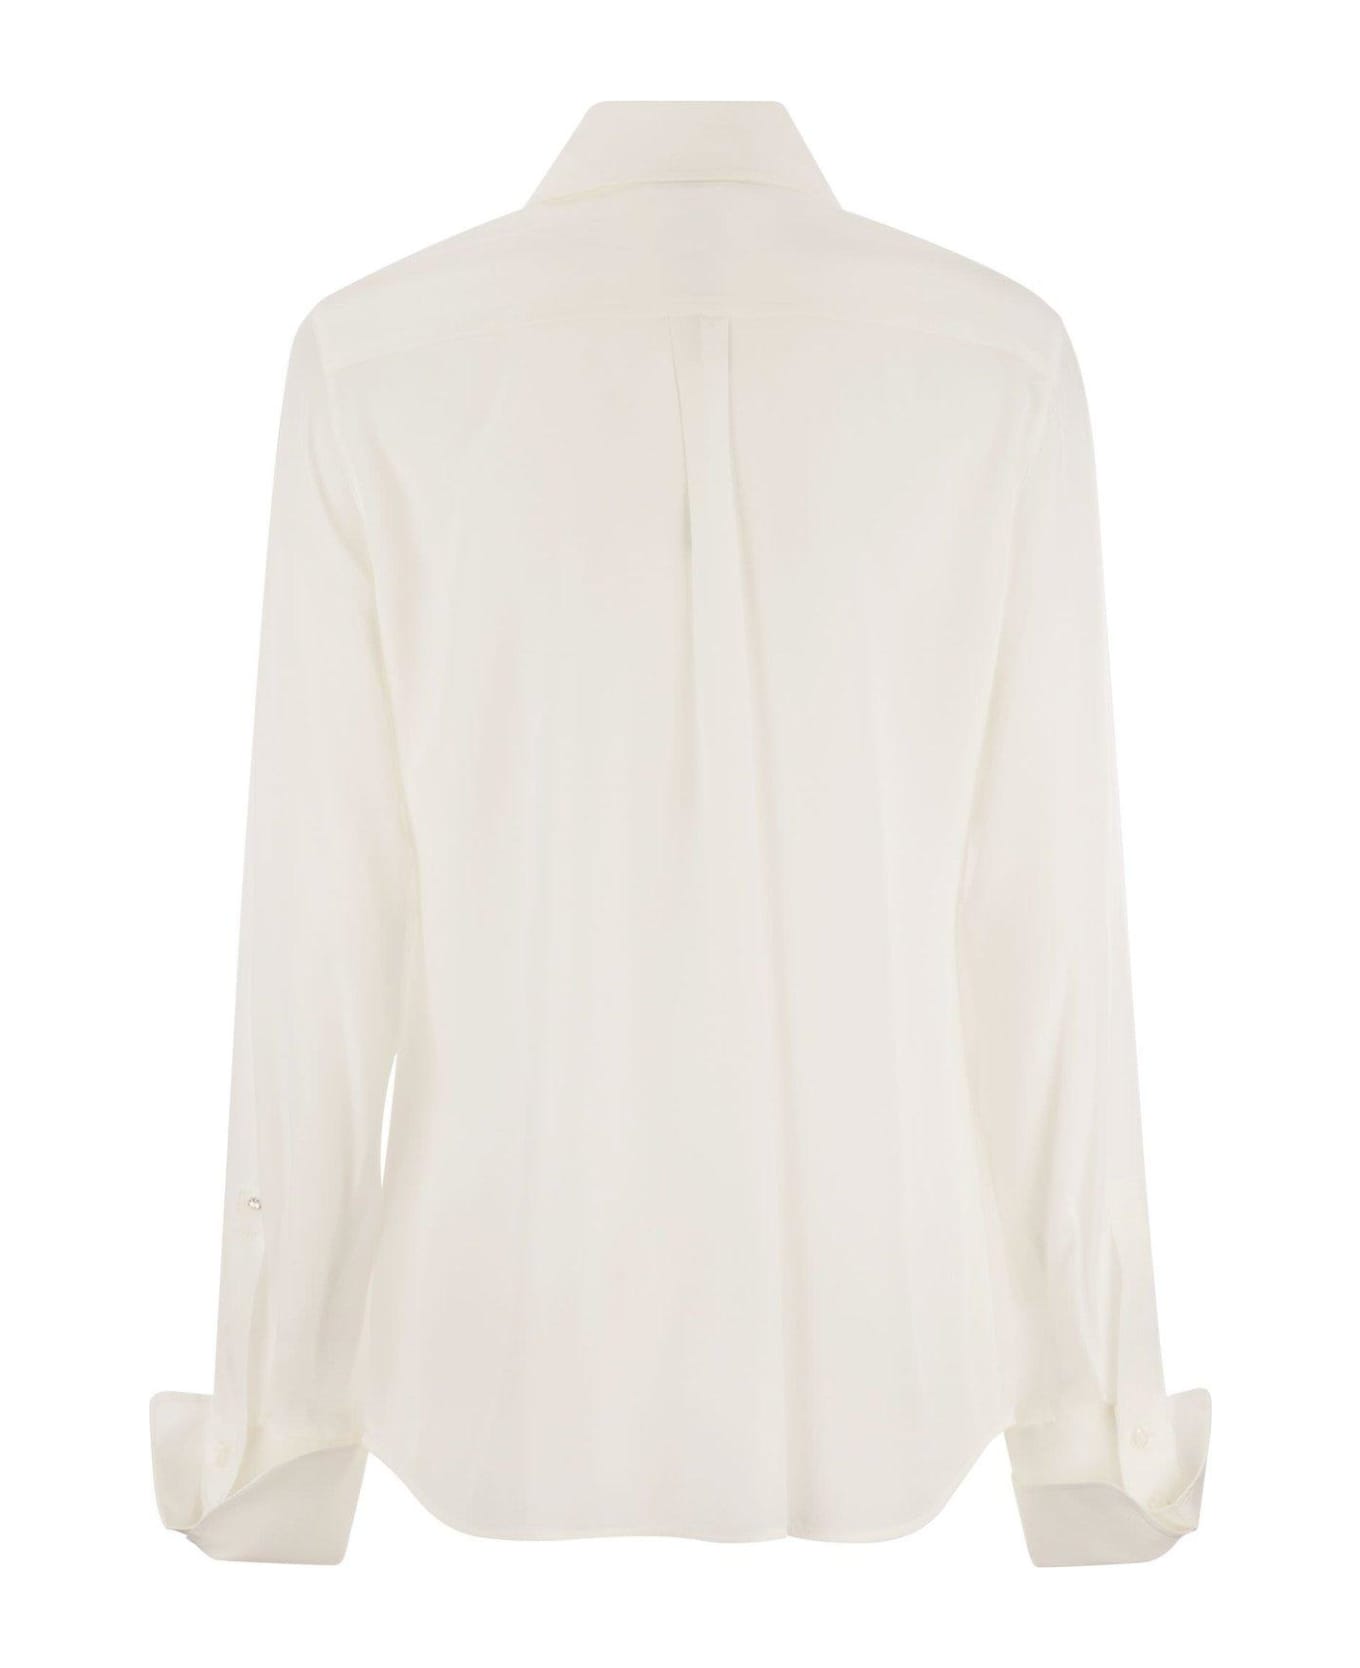 SportMax Leila Long Sleeve Shirt - White